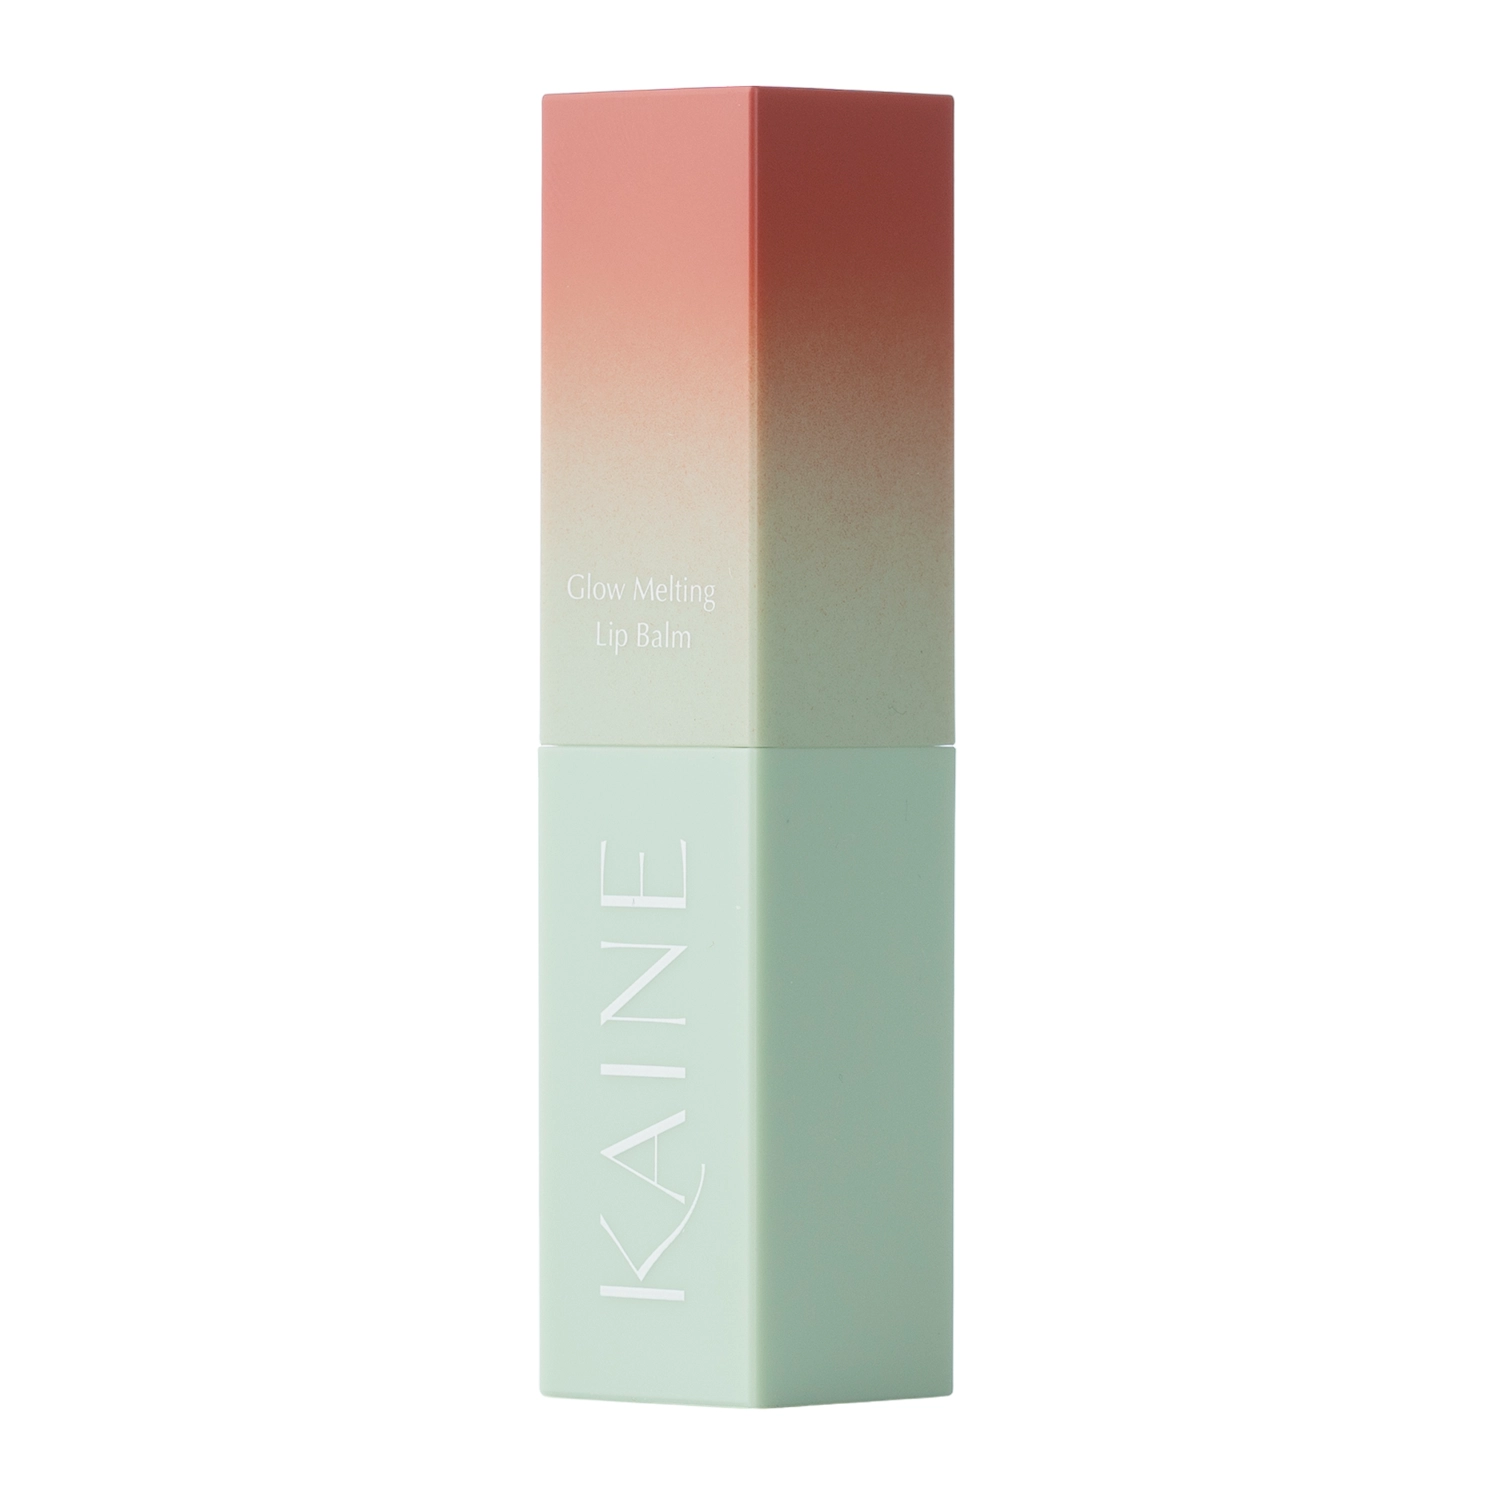 Kaine - Glow Melting Lip Balm - Feuchtigkeitsspendender Lippenbalsam - #Warm Apricot - 3.7g